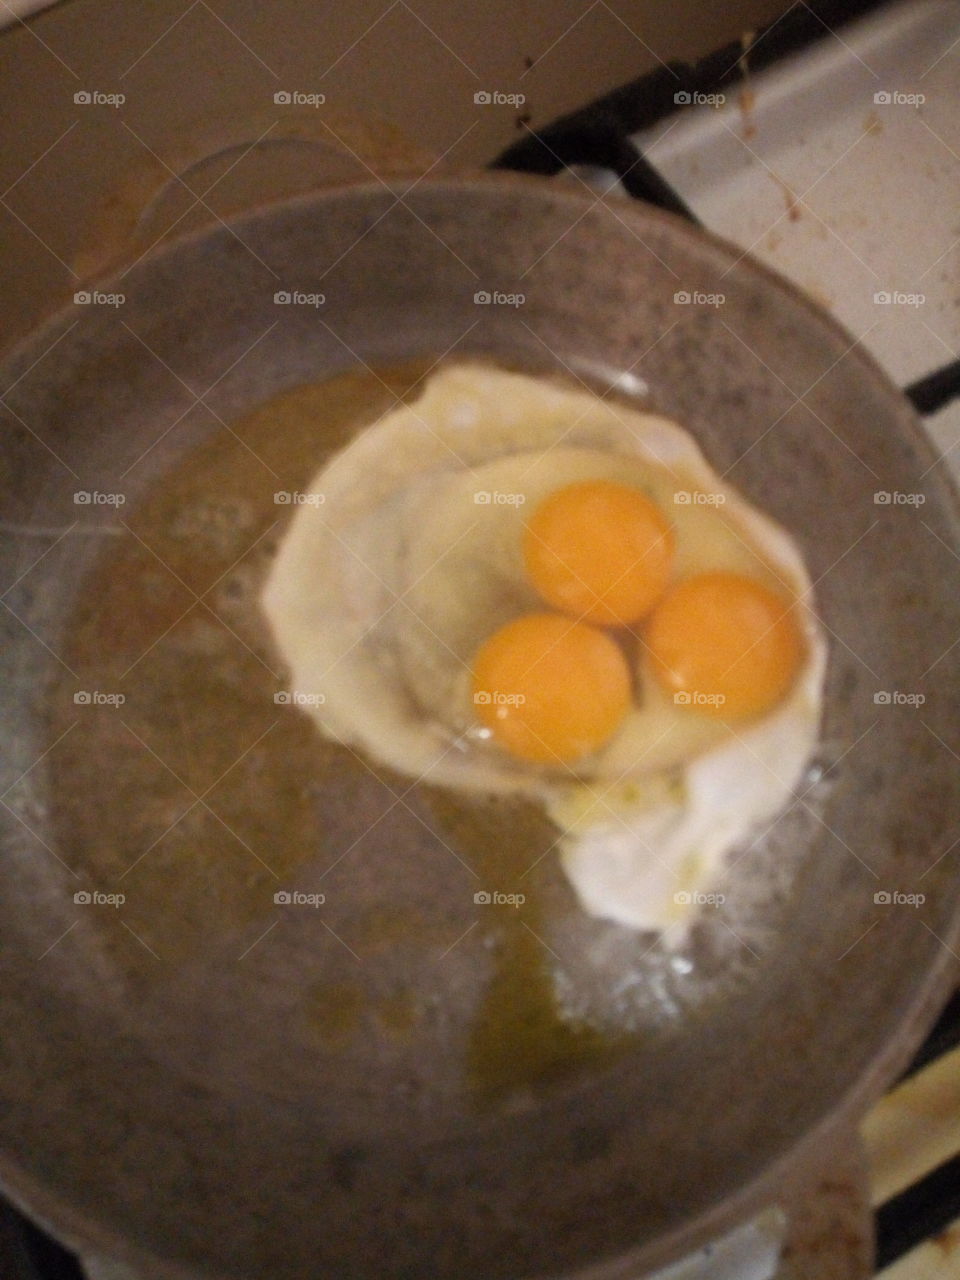 3 in 1 eggs